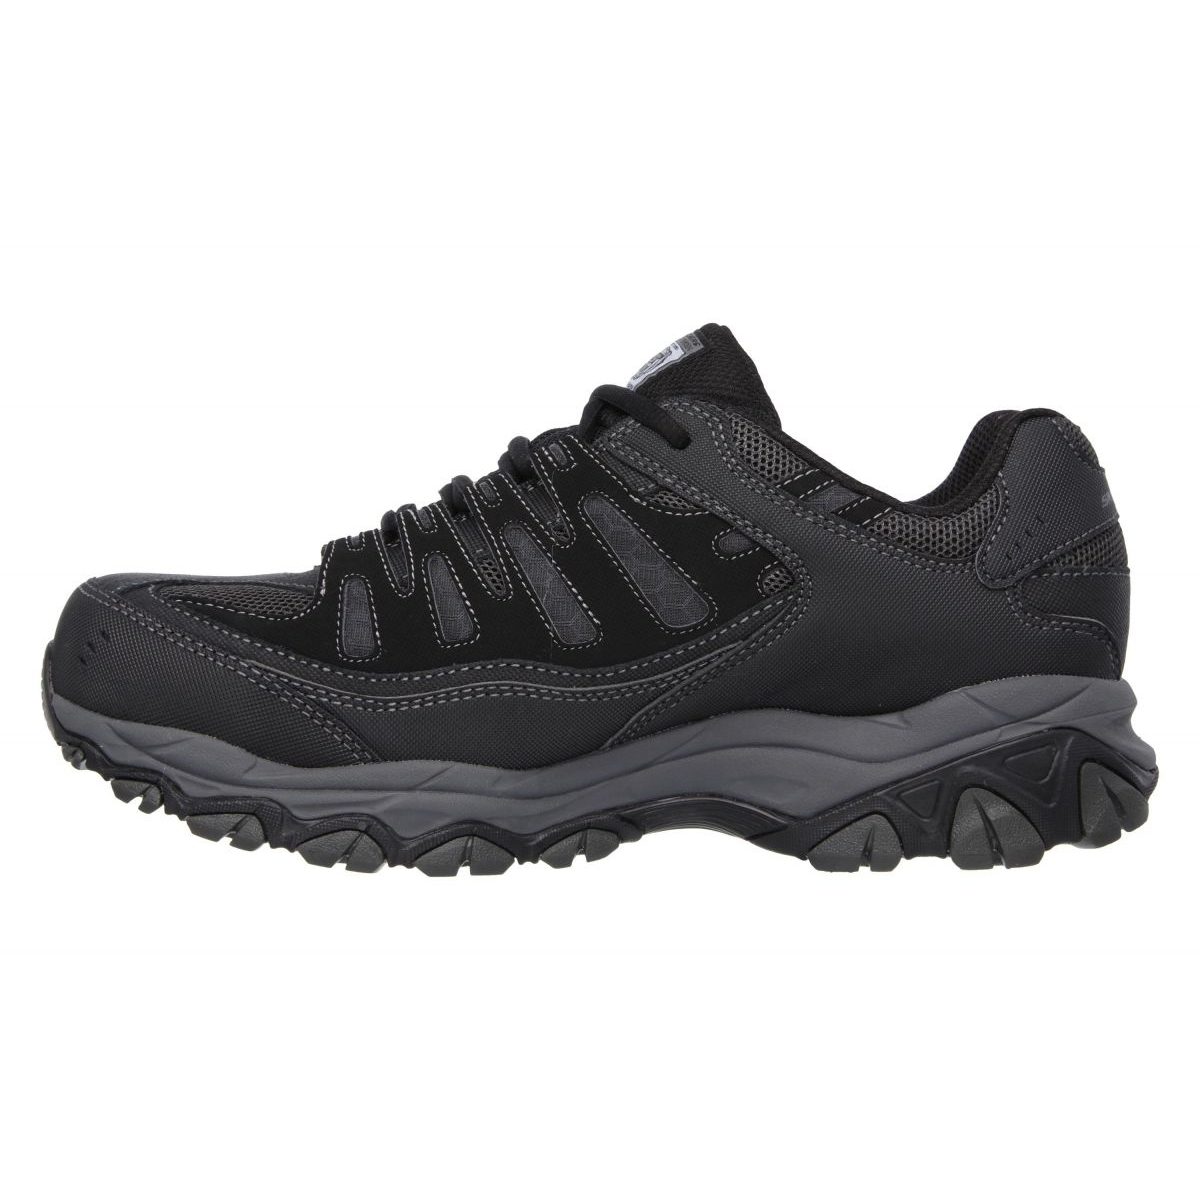 Skechers Men's Cankton-U Industrial Shoe 7 BLACK/CHARCOAL - BLACK/CHARCOAL, 12 Wide